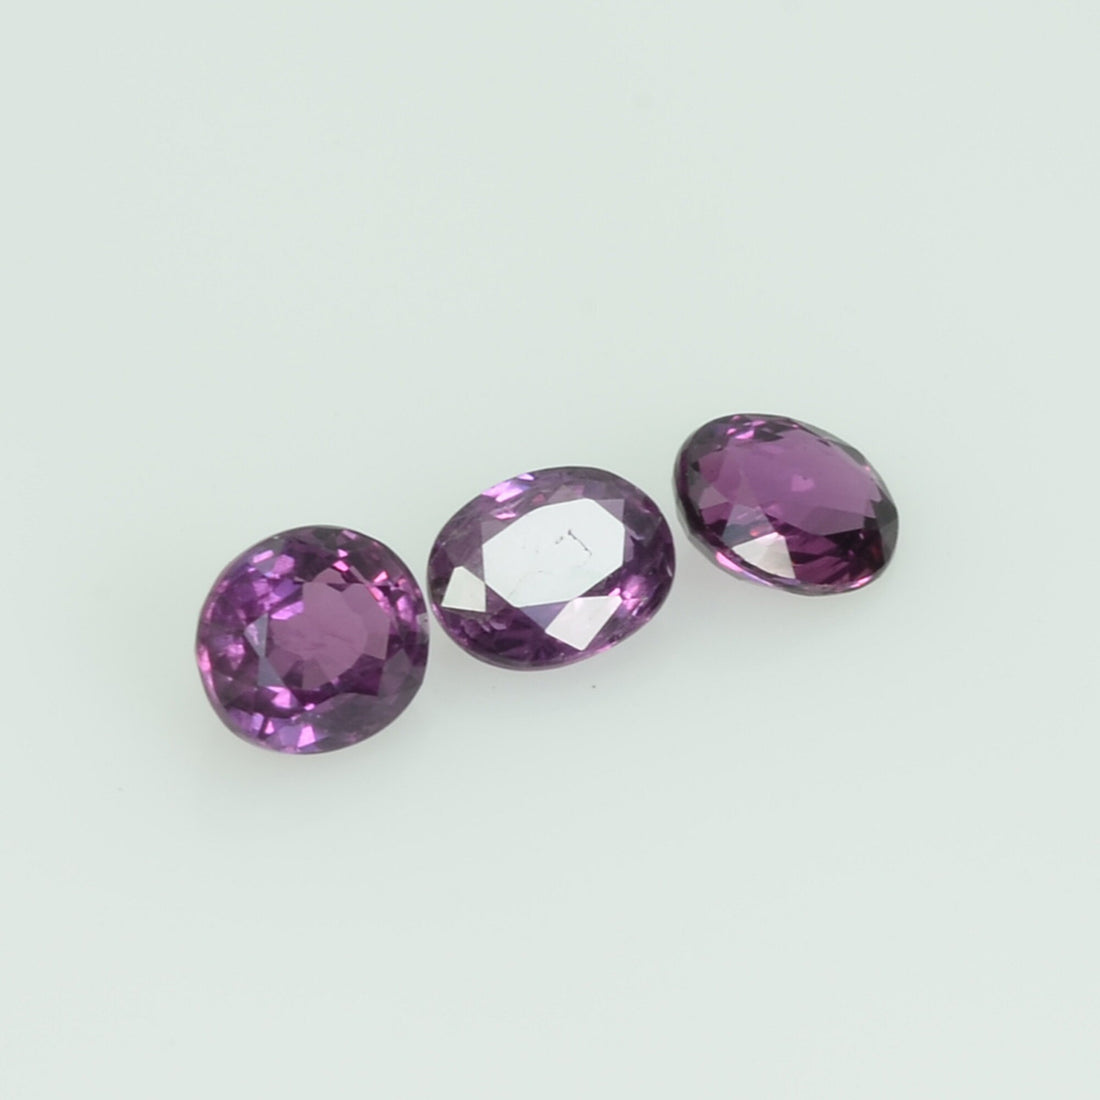 4x3.5 mm Lot Natural Thai Ruby Loose Gemstone Oval Cut